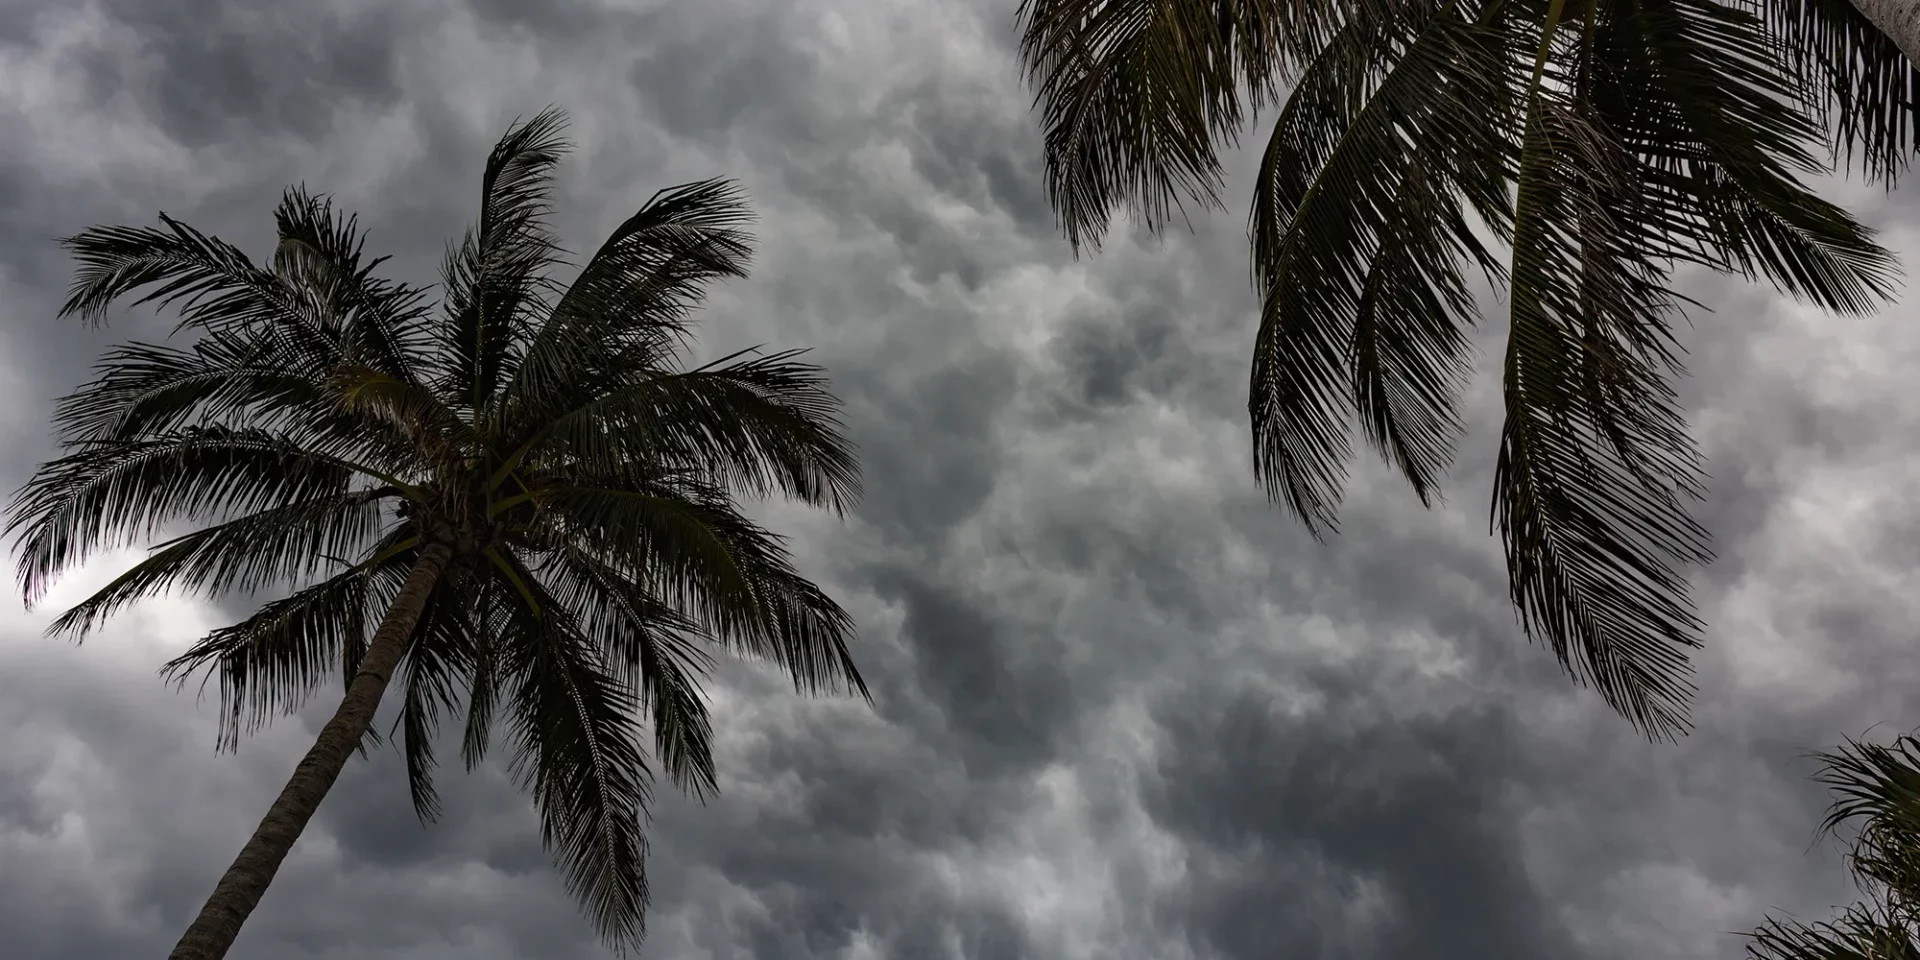 Florida Storm Chasing